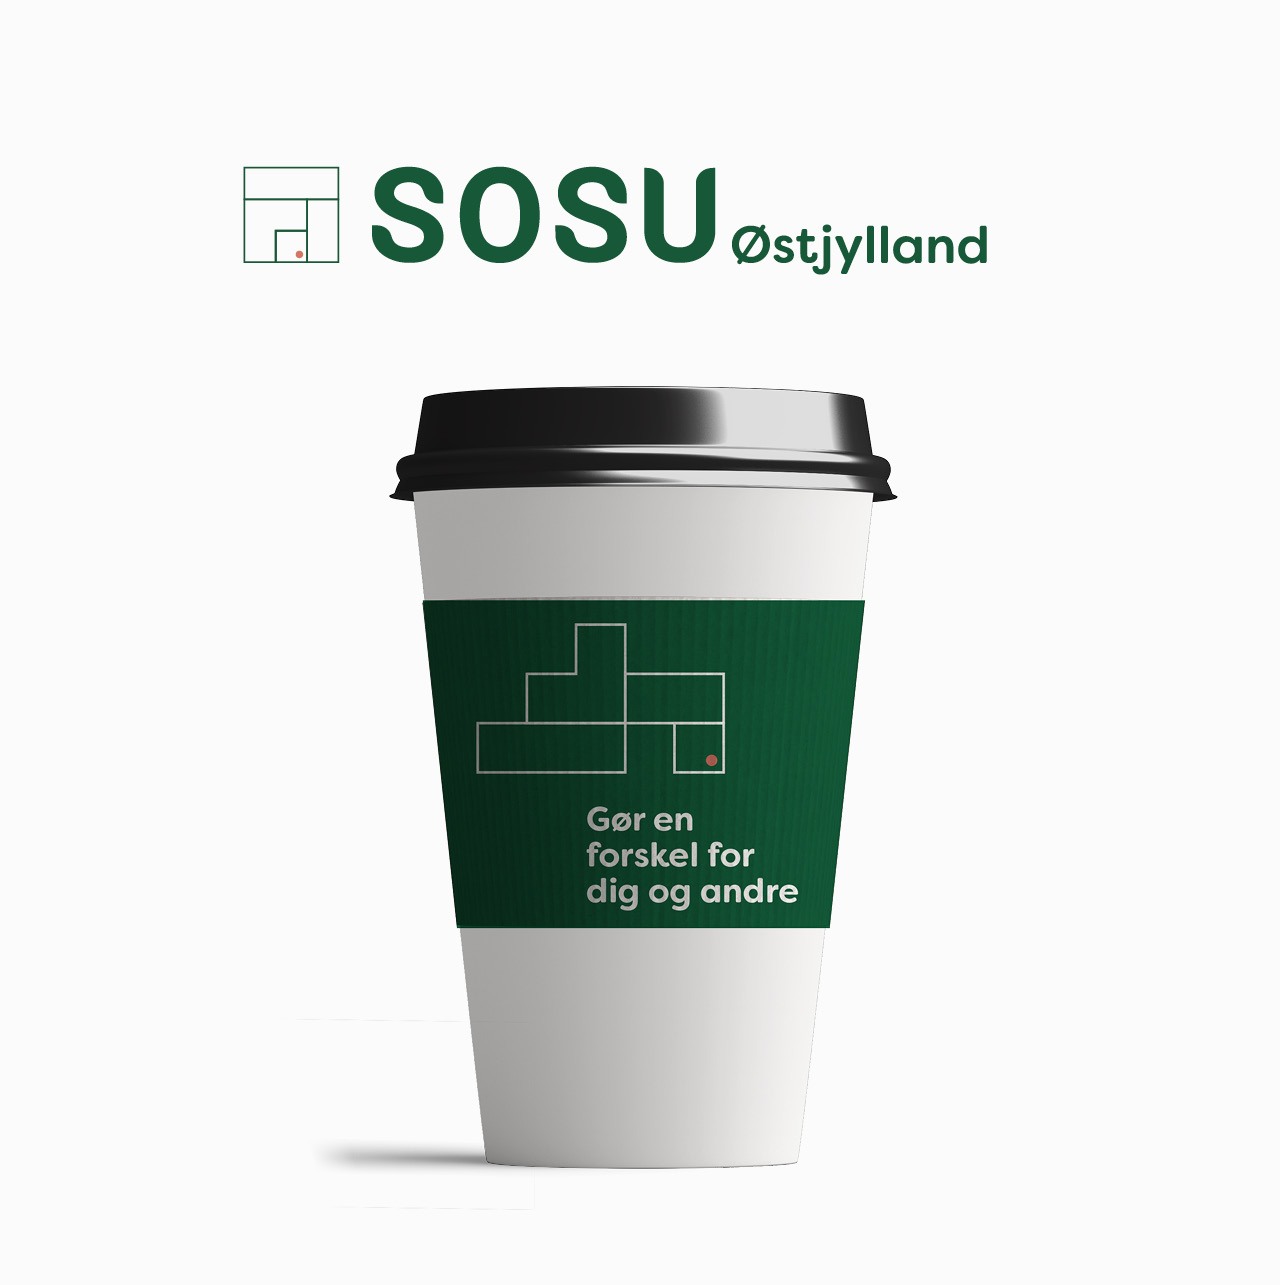 SOSU Østjylland - Visuel identitet - Kaffekop